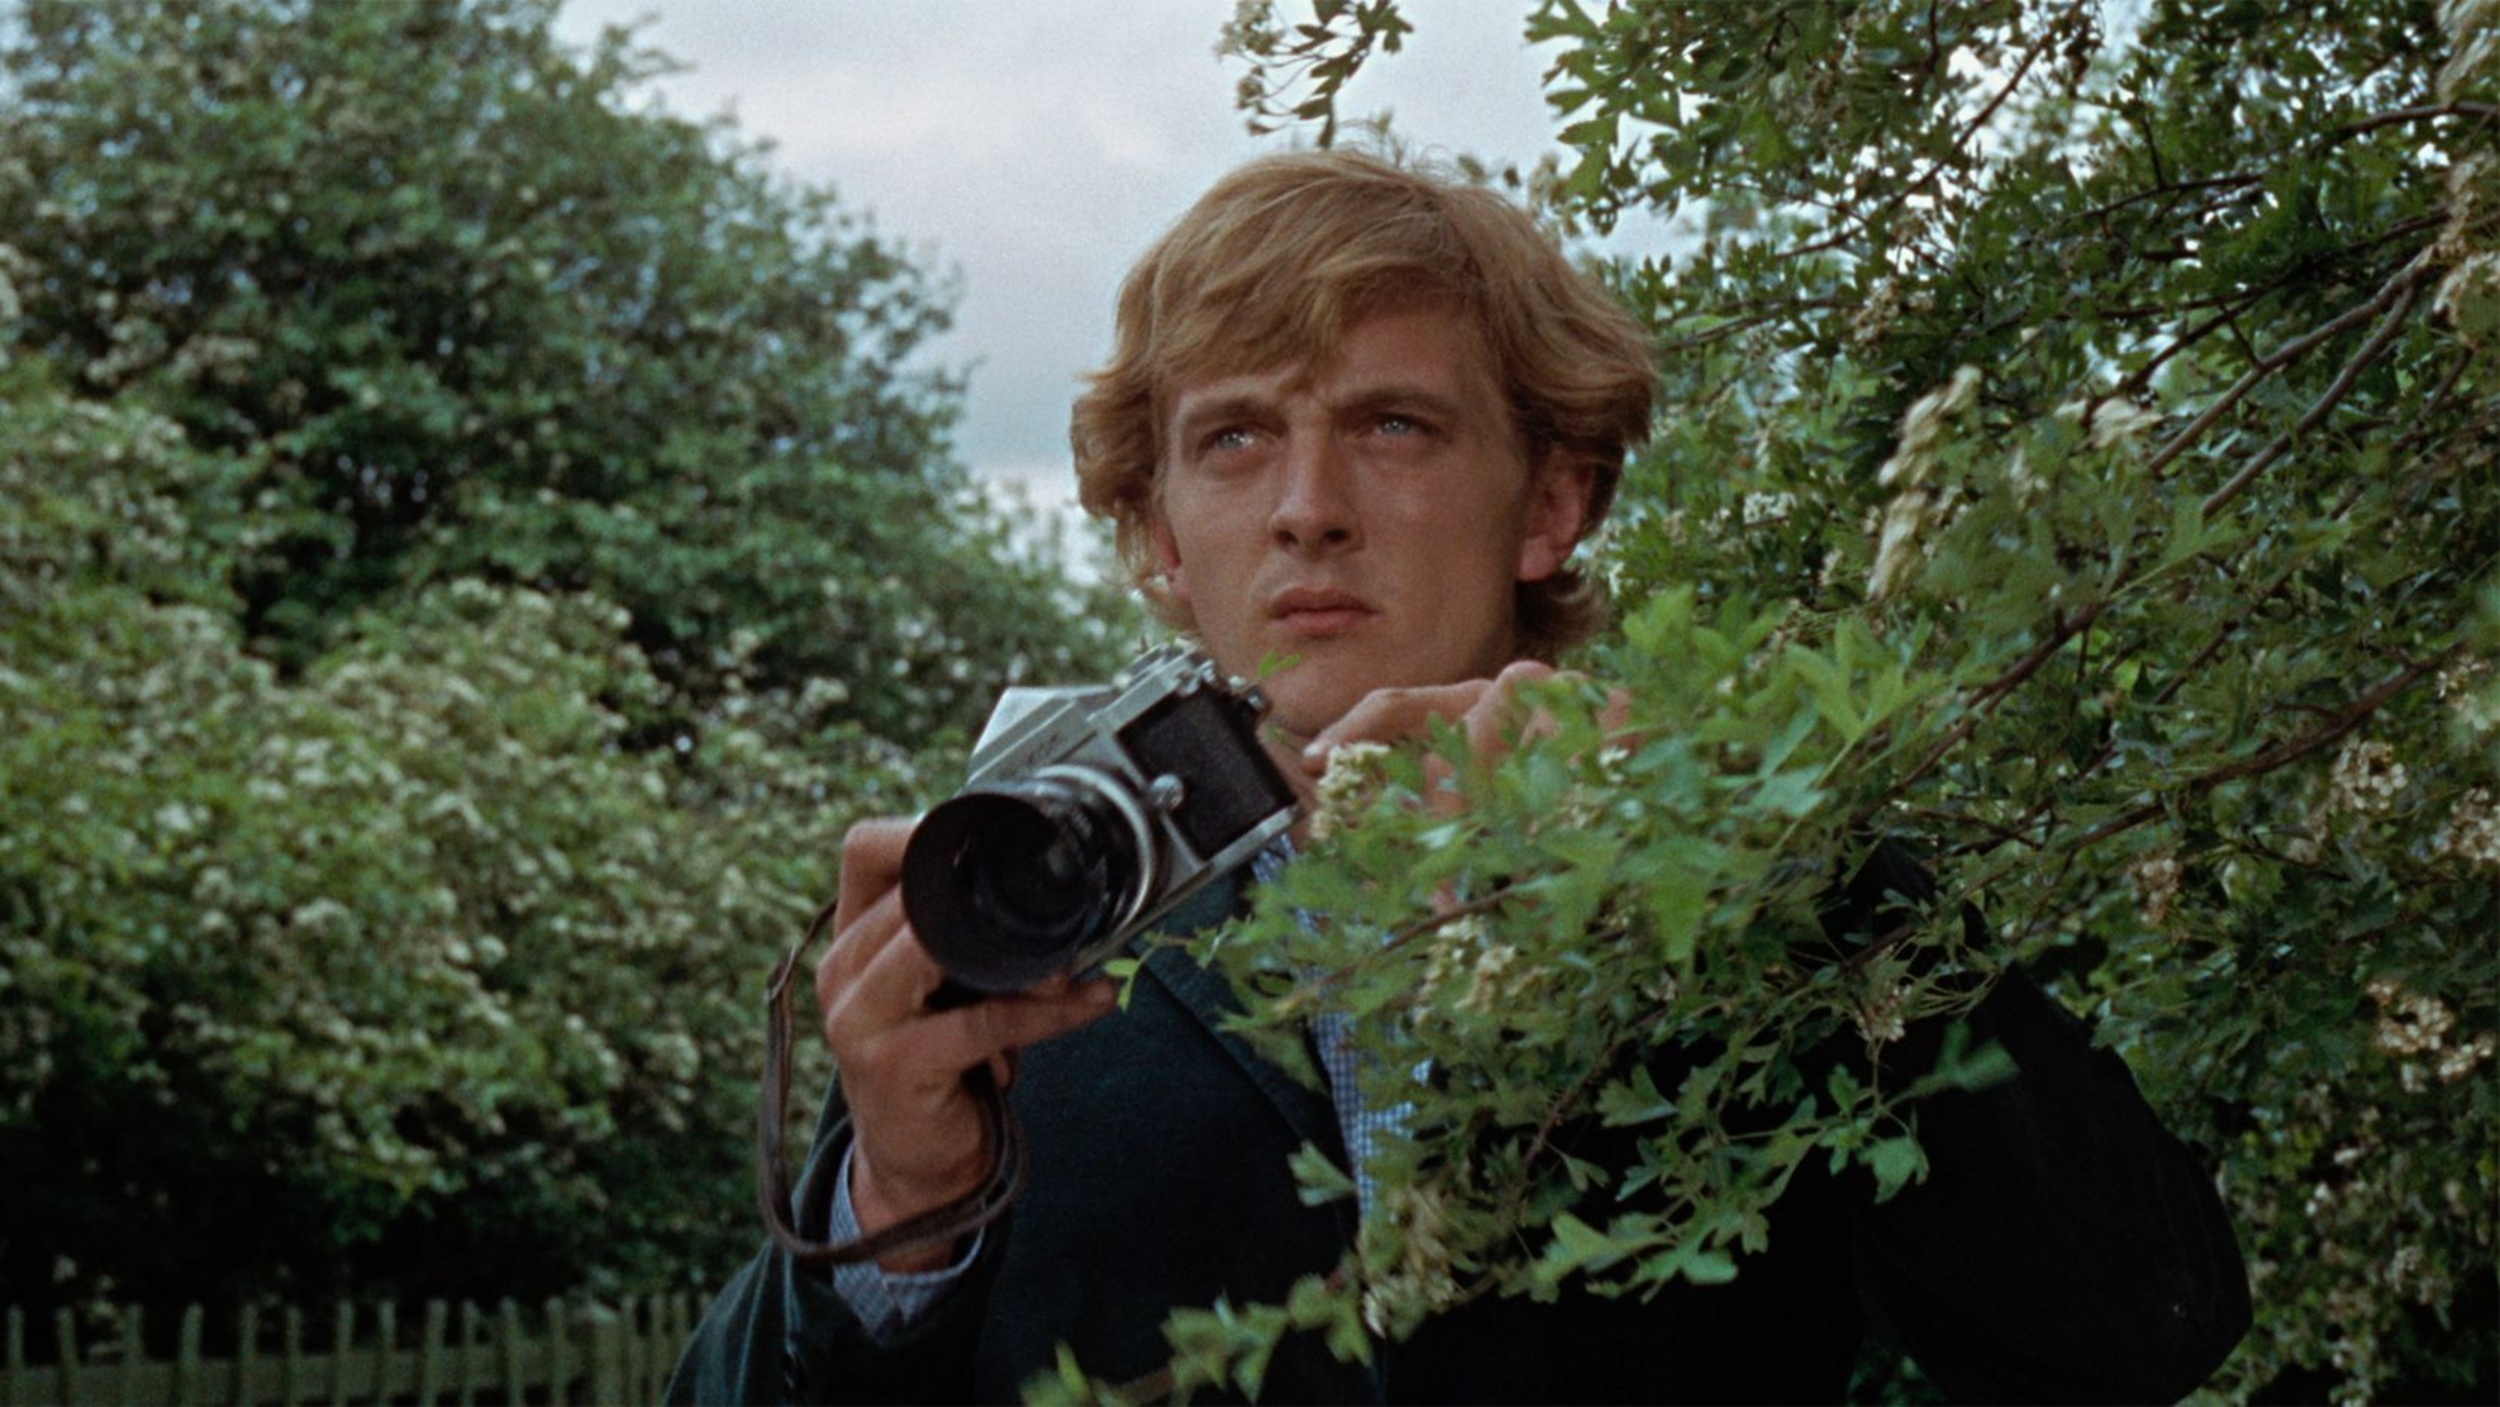 Blow up movie. Дэвид Хеммингс Фотоувеличение. Фотоувеличение / blowup (1966). Фотоувеличение", Антониони (1966).